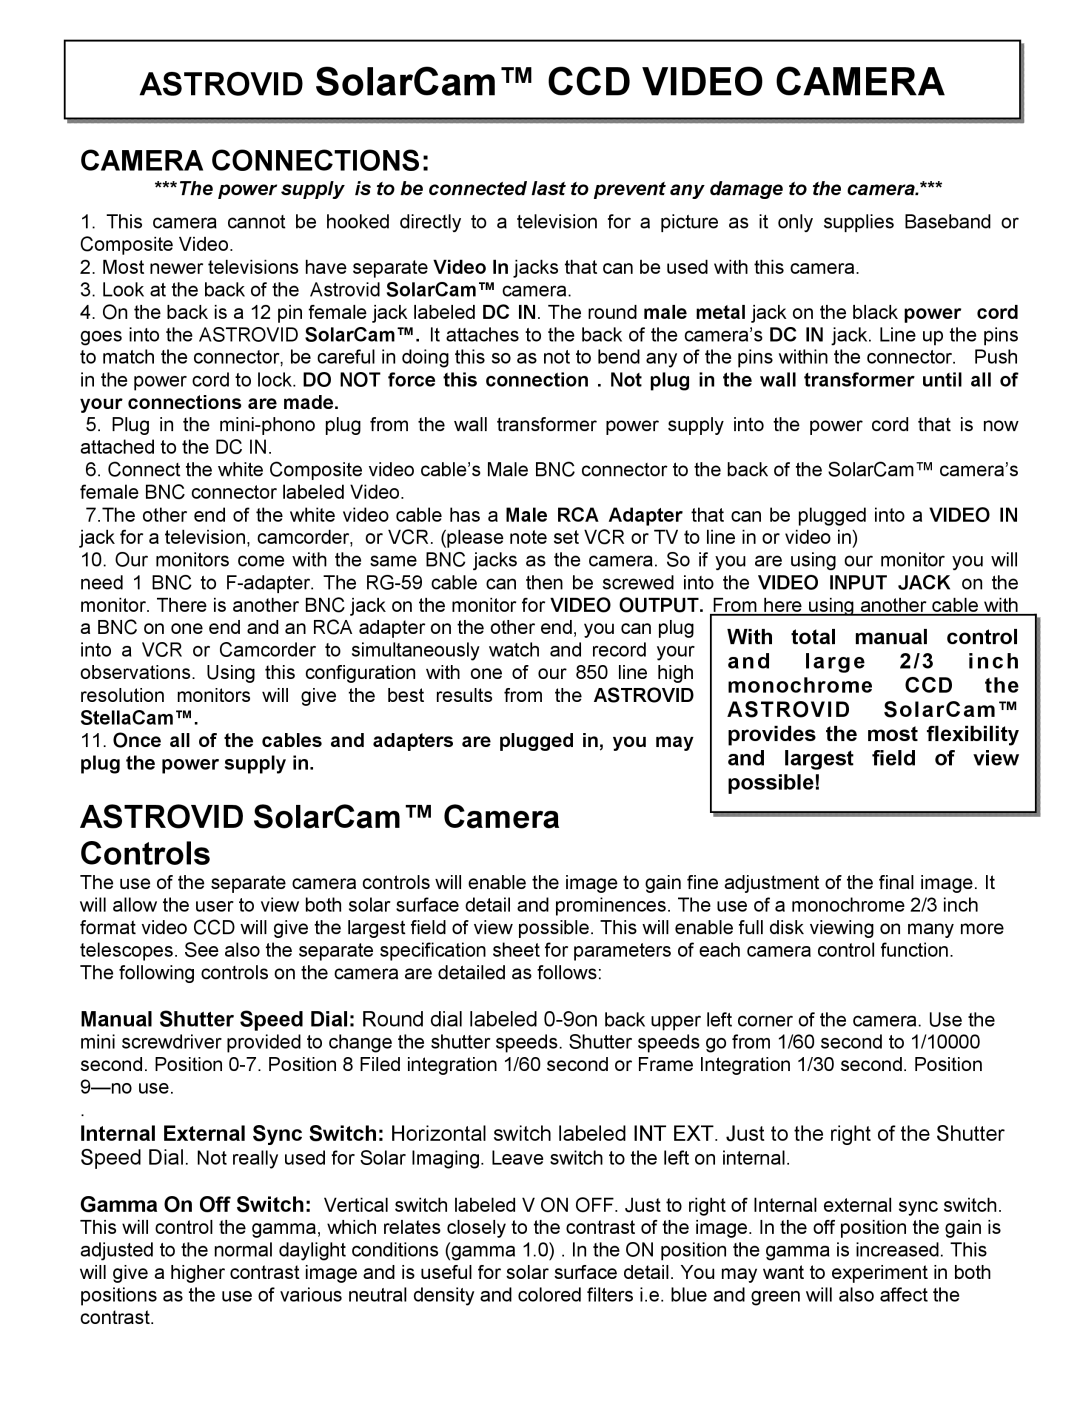 RCA SOLAM VIDEO CAMERA warranty ASTROVID SolarCam CCD VIDEO CAMERA, Camera Connections, ASTROVID SolarCam Camera Controls 